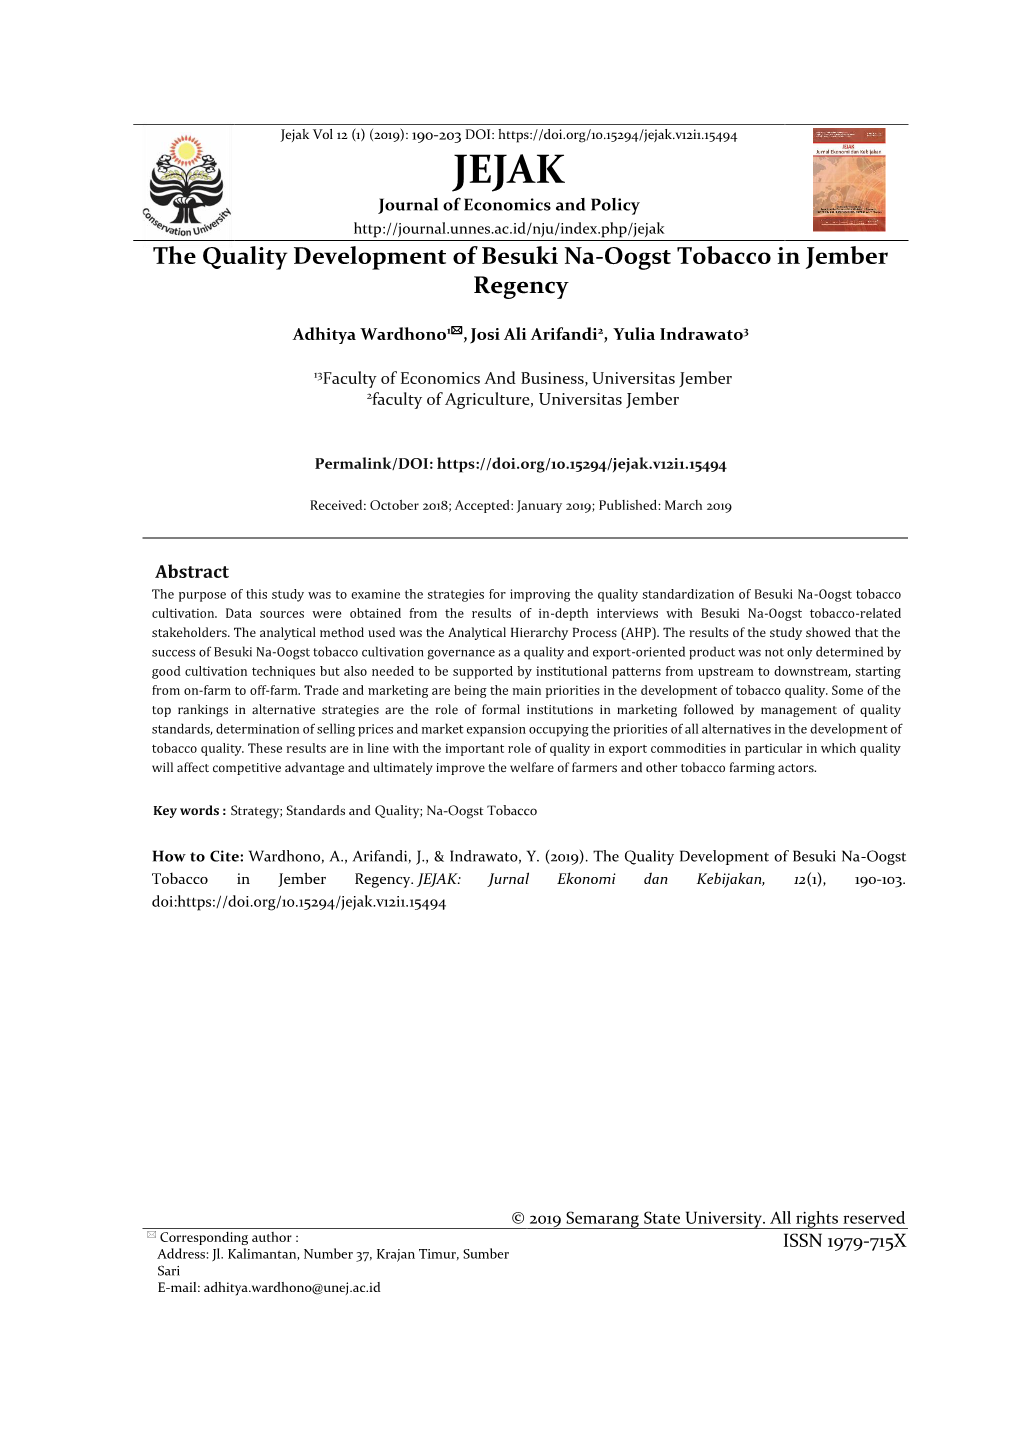 The Quality Development of Besuki Na-Oogst Tobacco in Jember Regency